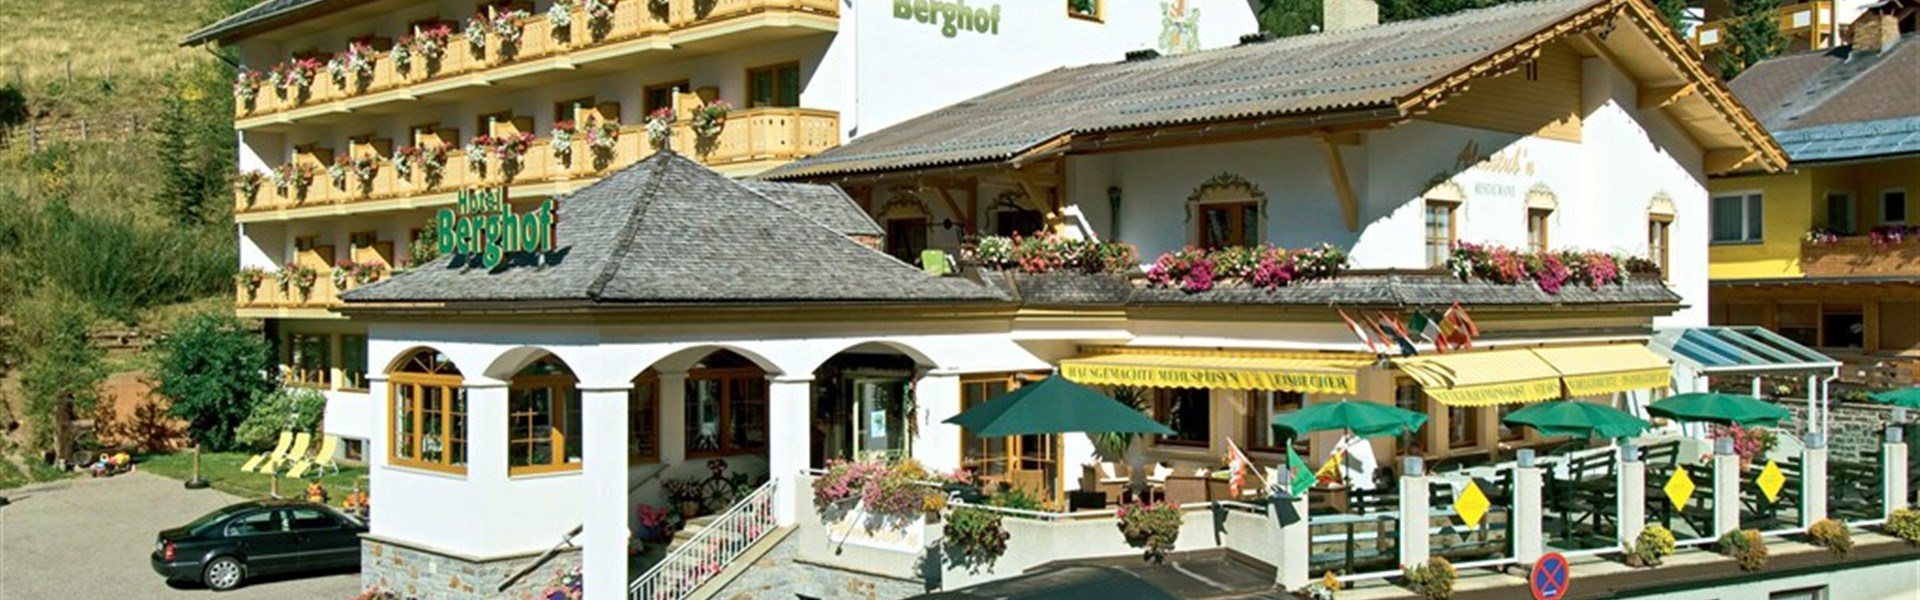 Marco Polo - Familienhotel Berghof (S) - 